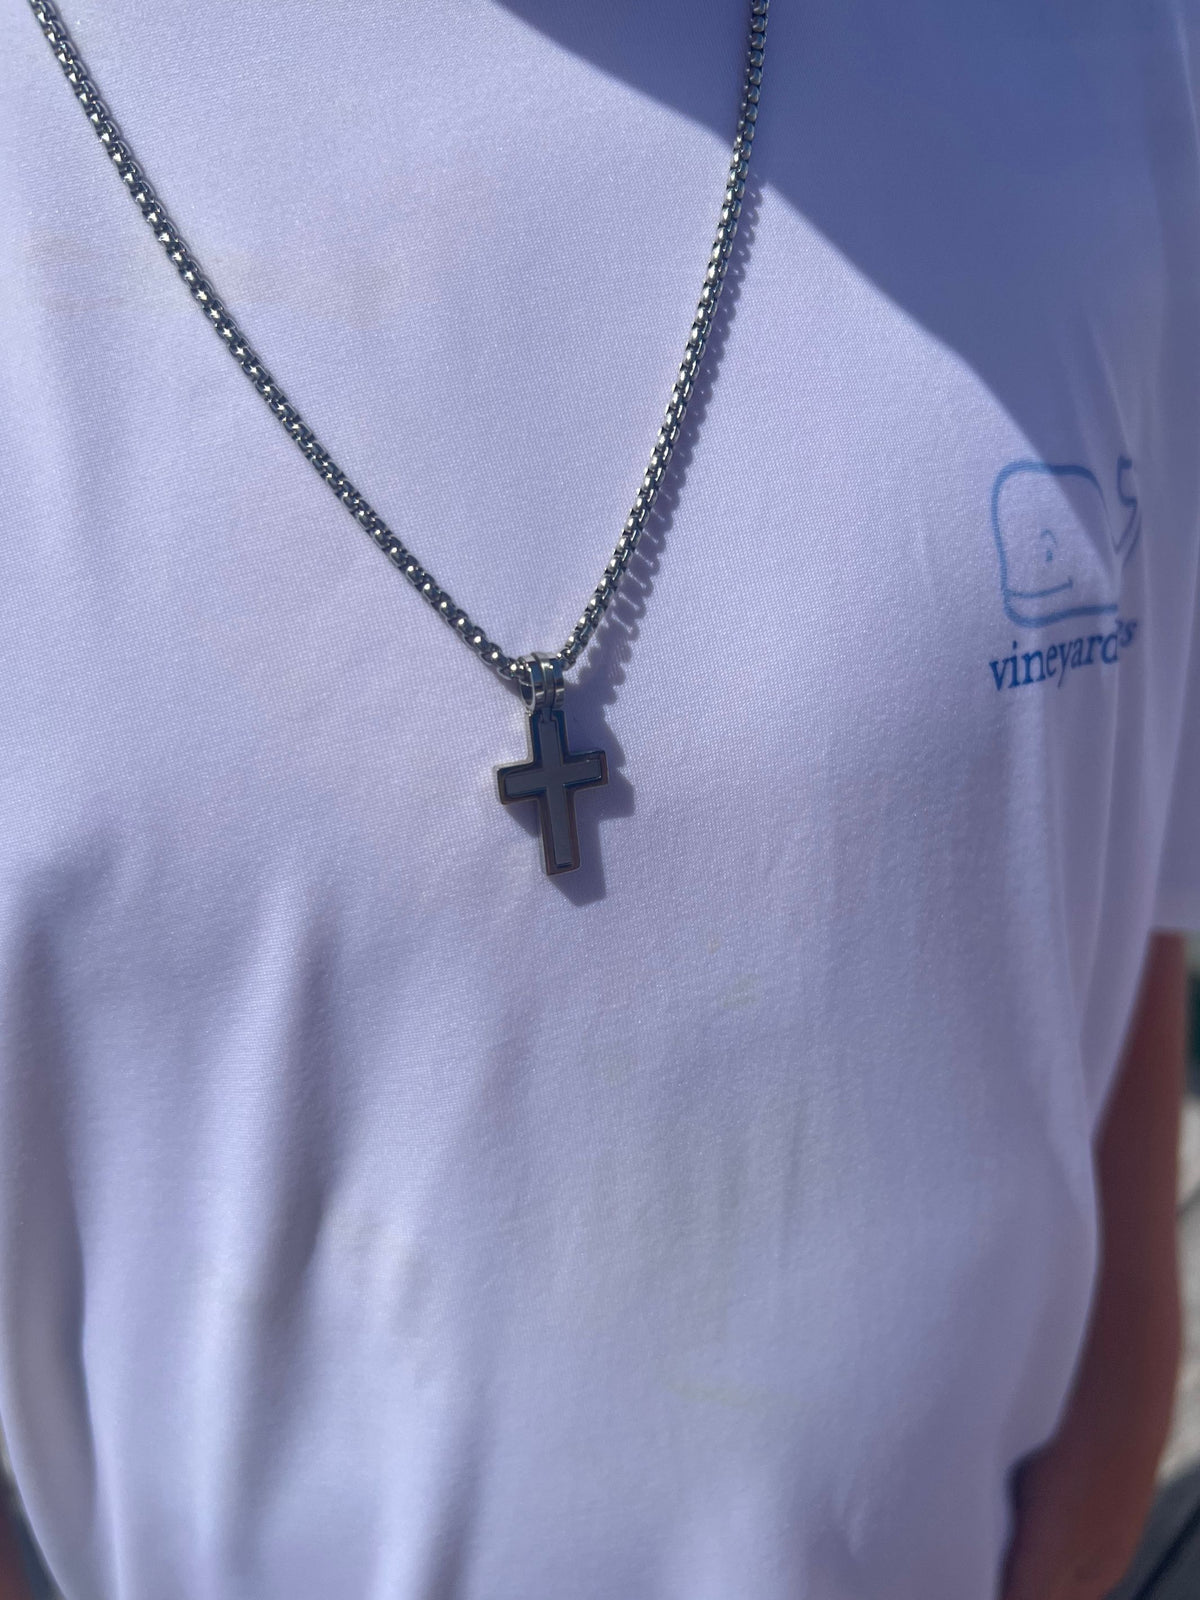 Men's Cross Box Chain Necklace